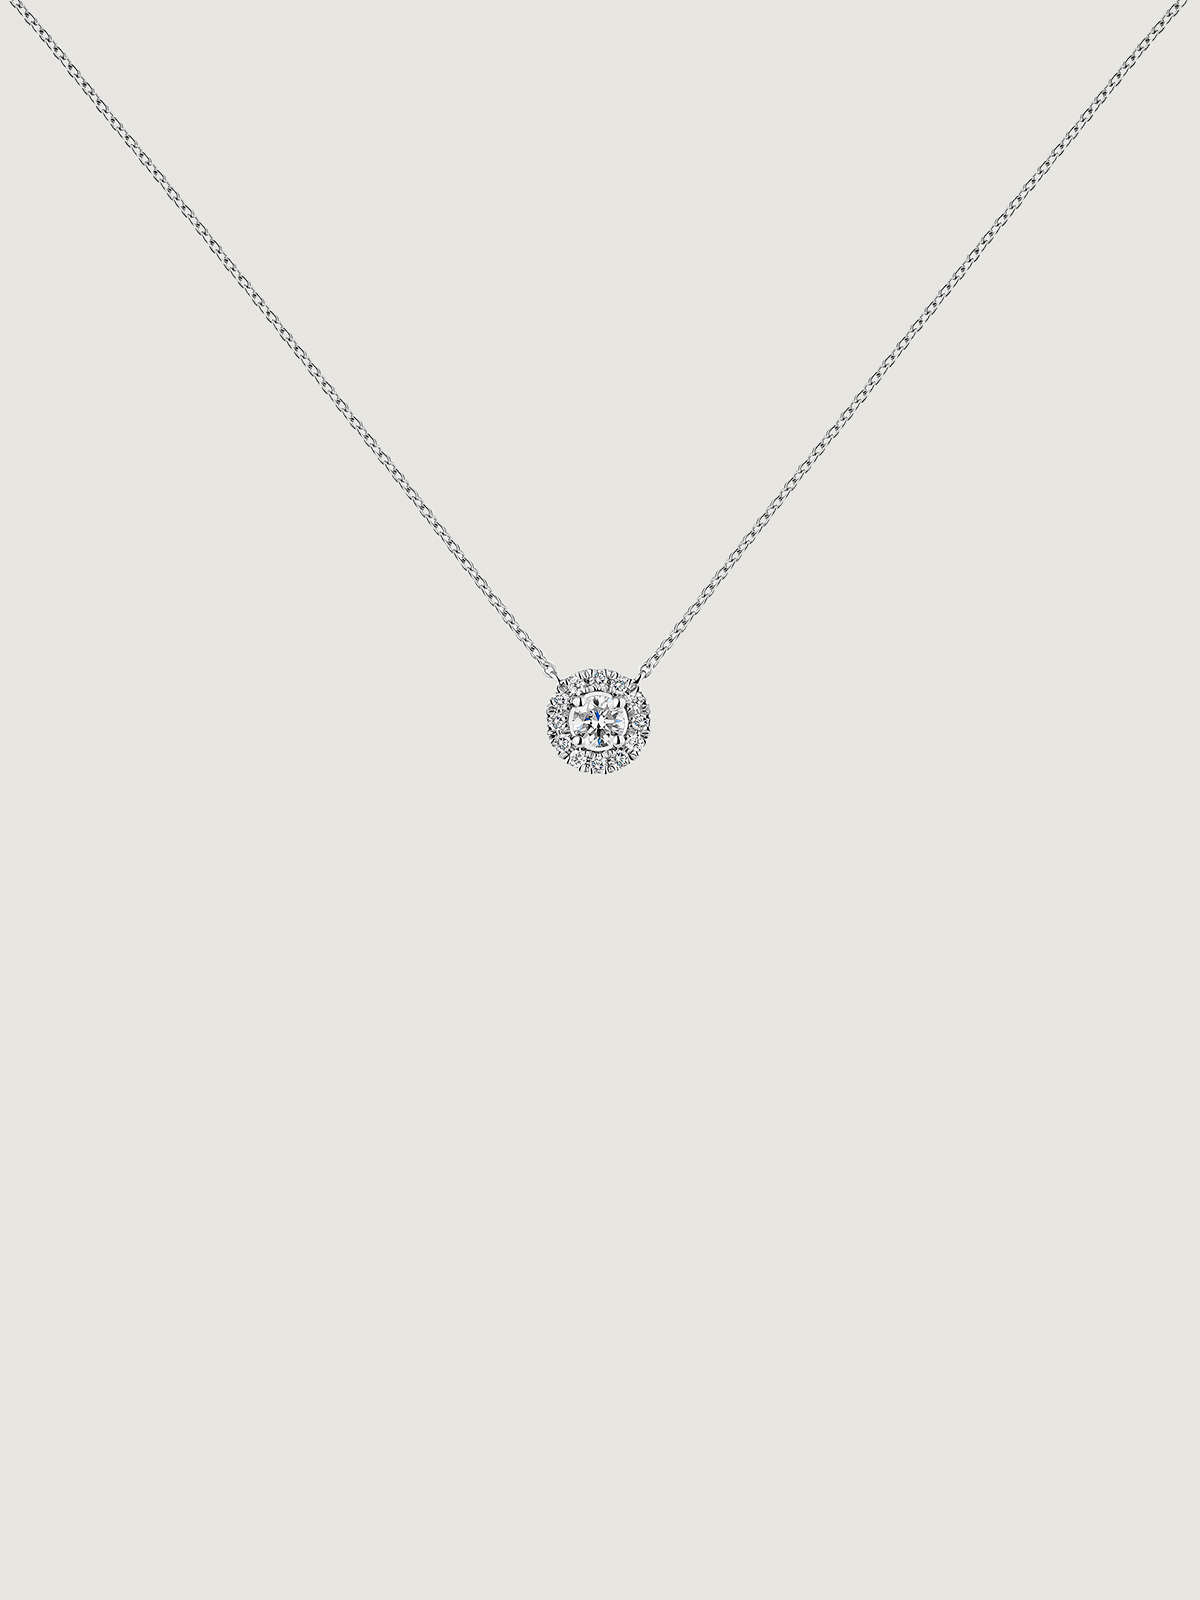 18K white gold pendant with 0.11cts diamond and diamond halo